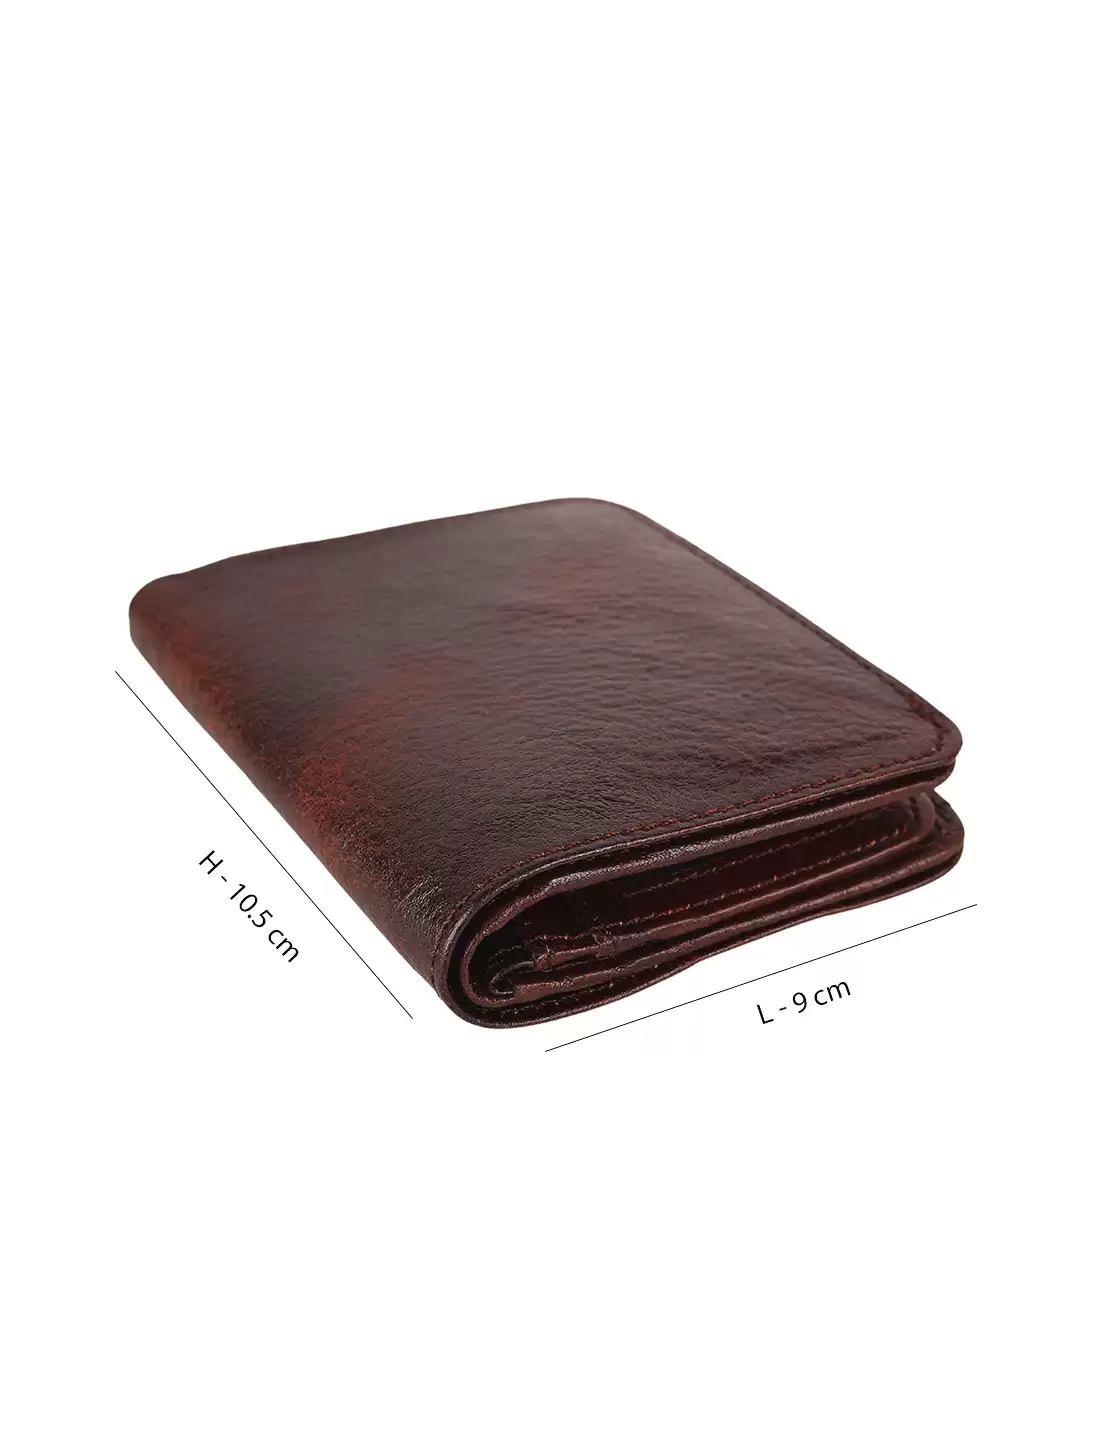 Real Leather Men's Bag, Large Capacity Clutch Wallet Envelope Bag Luxury  Handbag | eBay